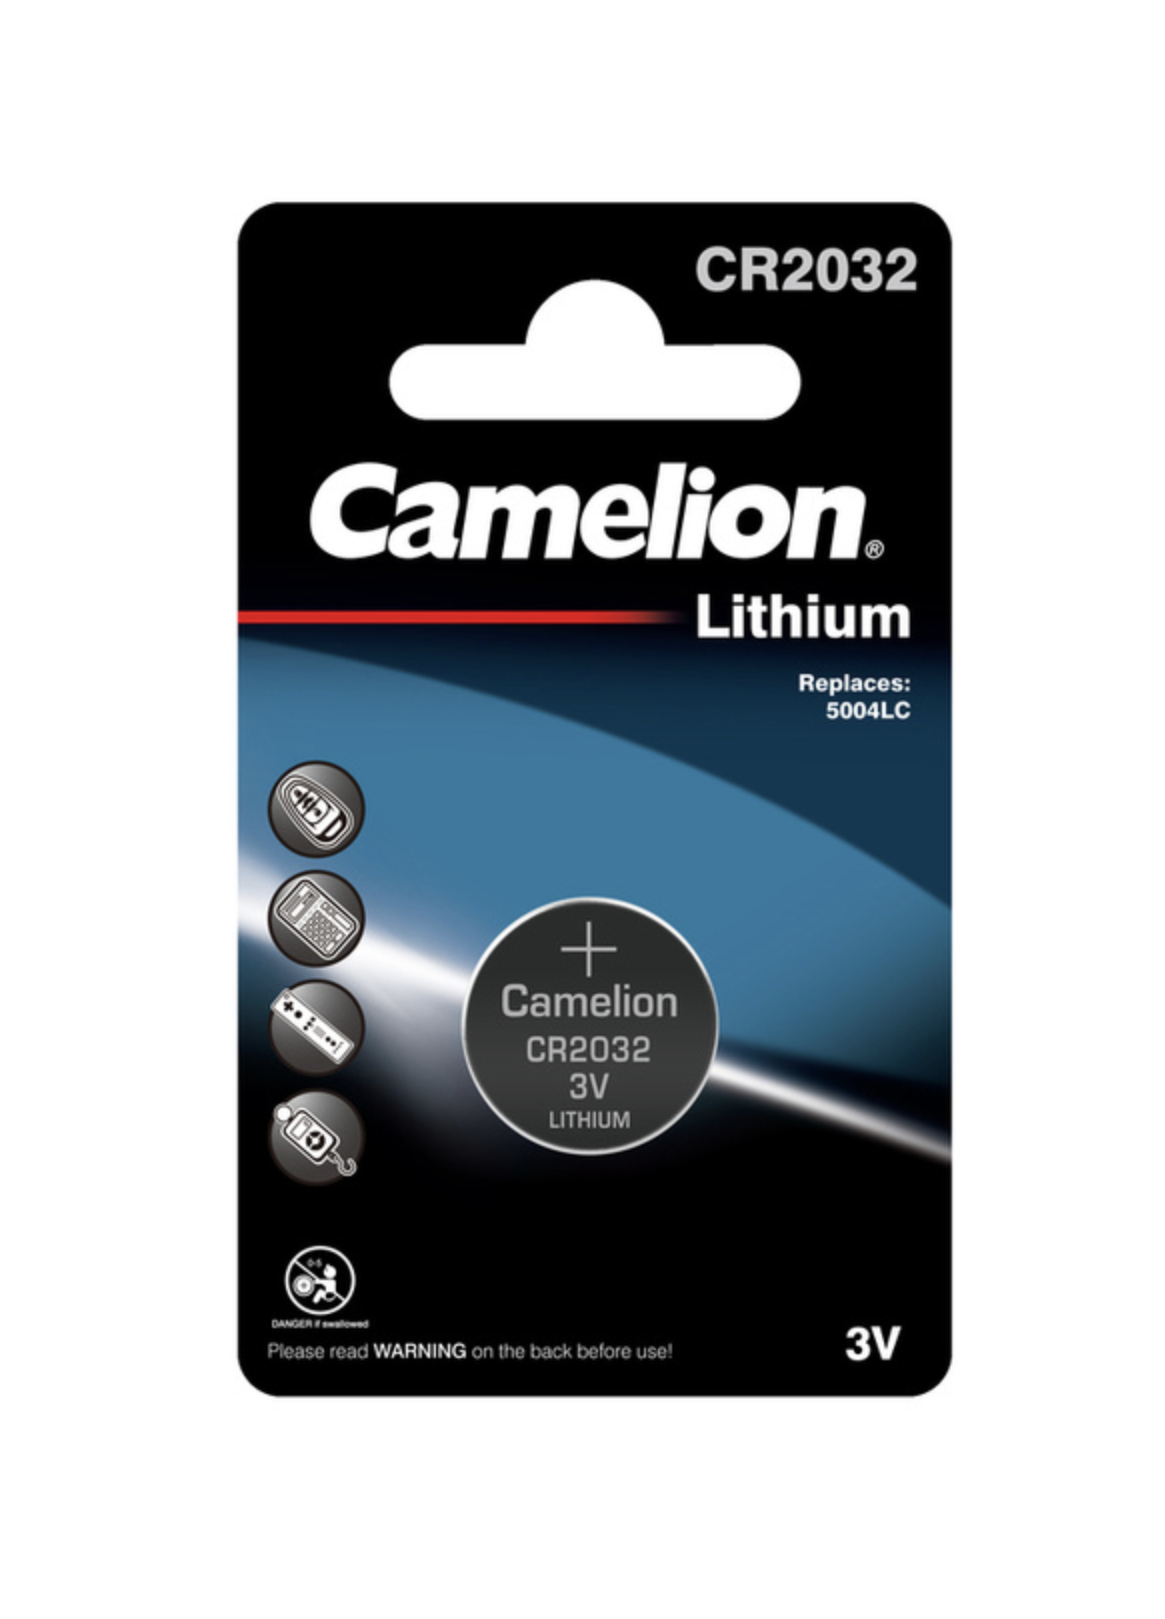   / Camelion CR2032-BP1 -  Lithium 3V 5004LC  1 